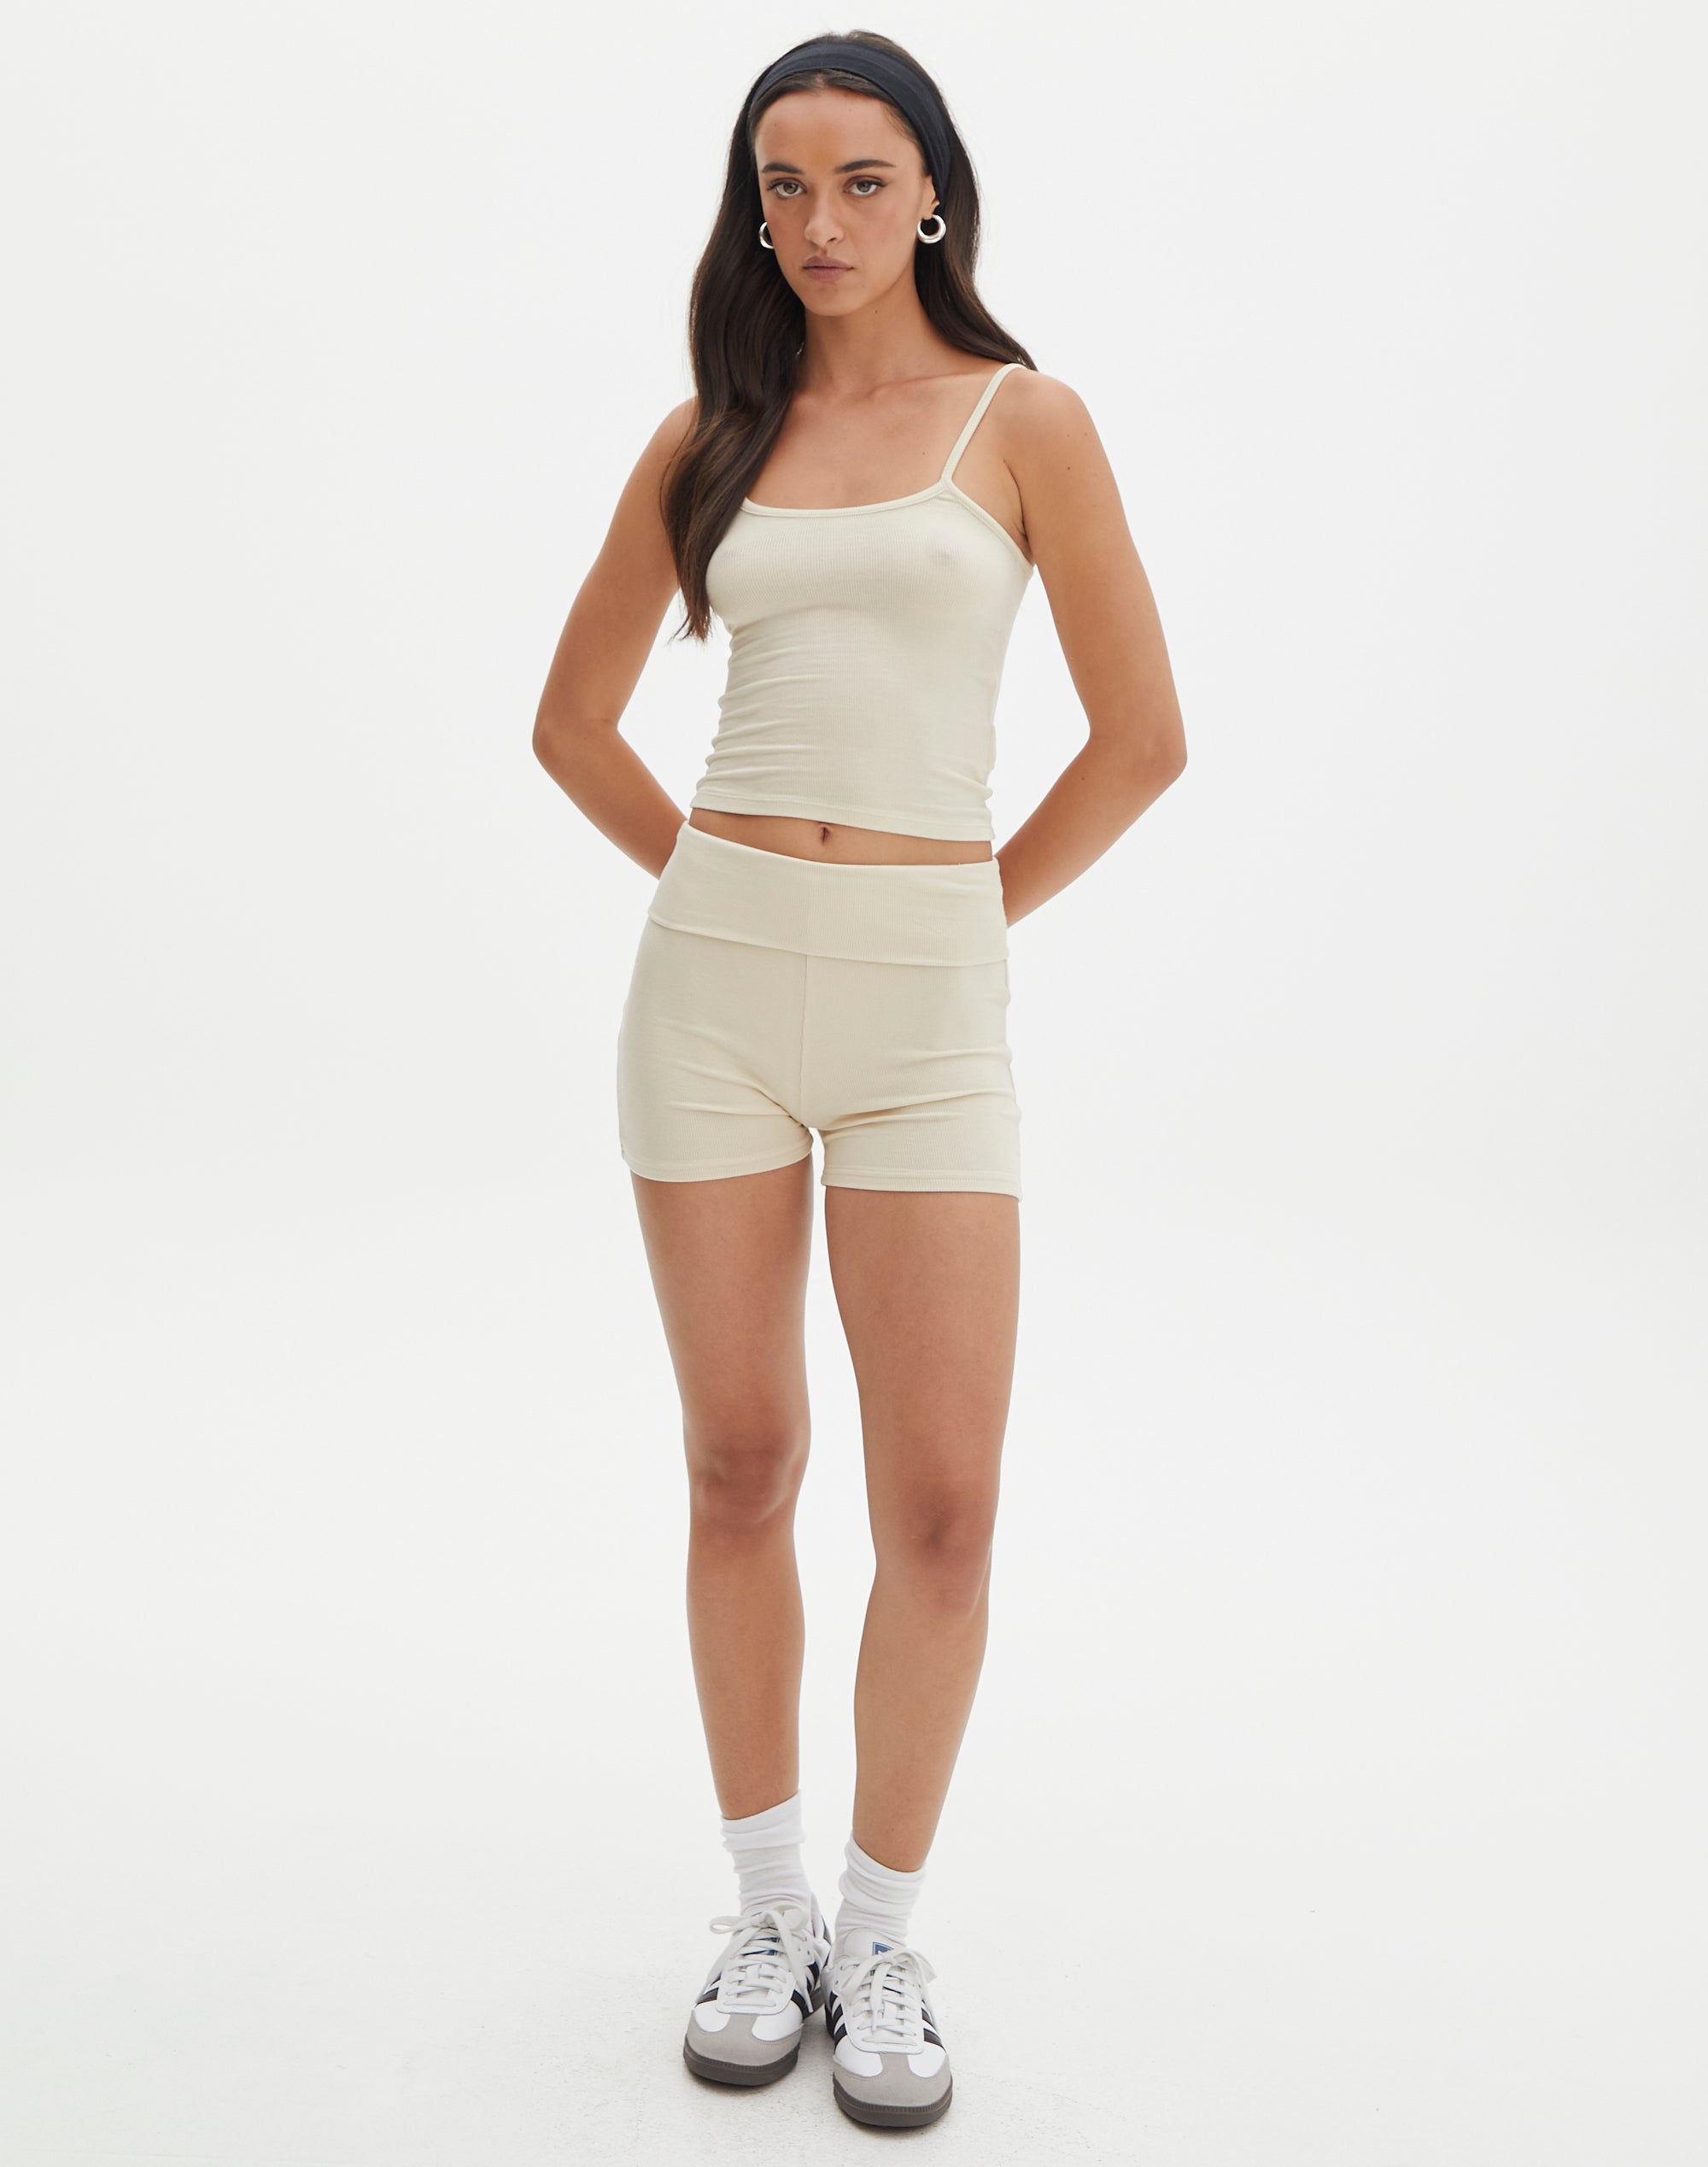 Luxe Lounge Modal Booty Shorts in Best Spud